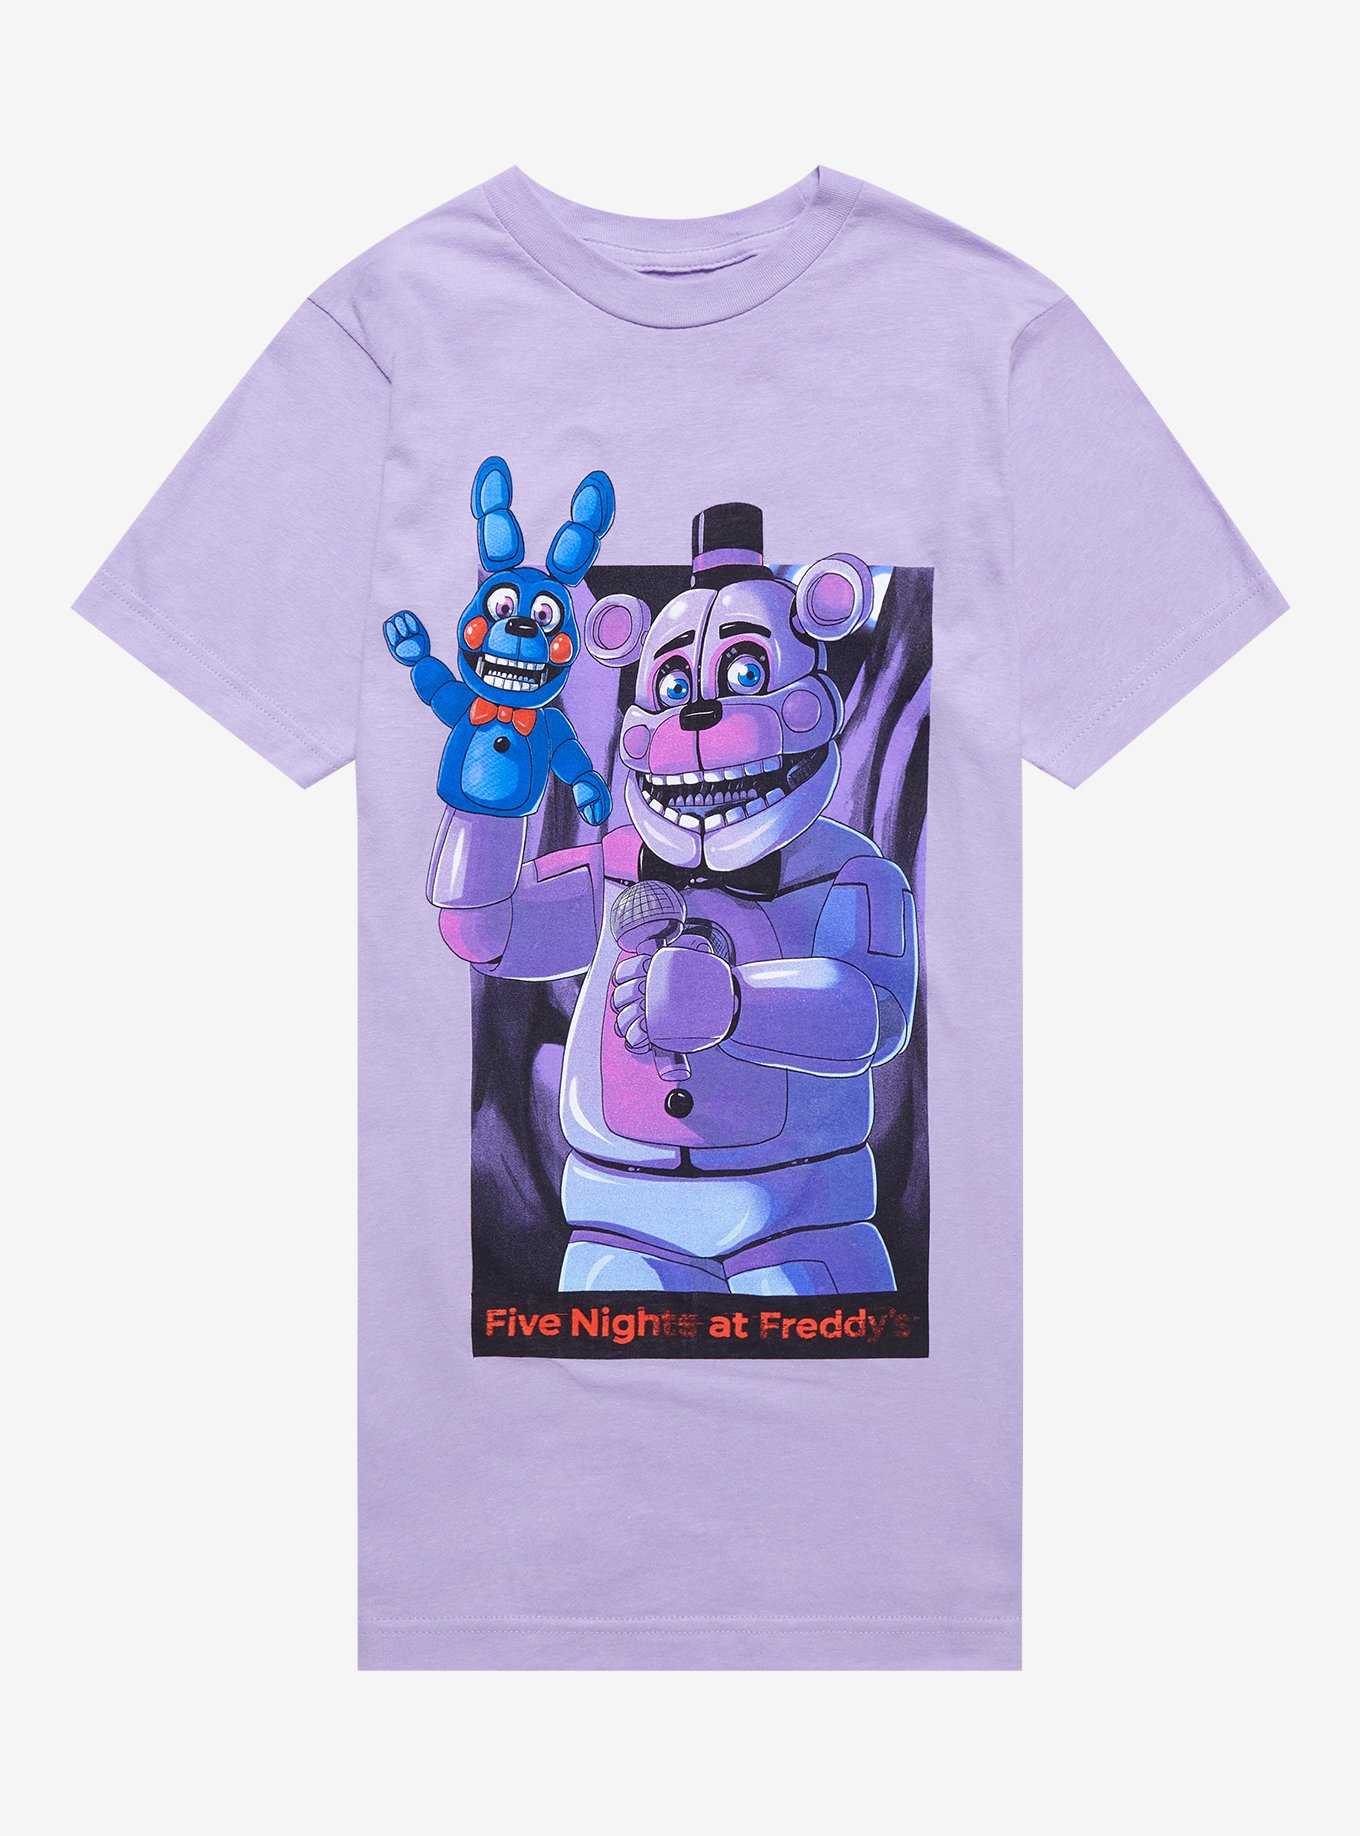 Five Nights At Freddy's Bonnie Hand Puppet Boyfriend Fit Girls T-Shirt, , hi-res